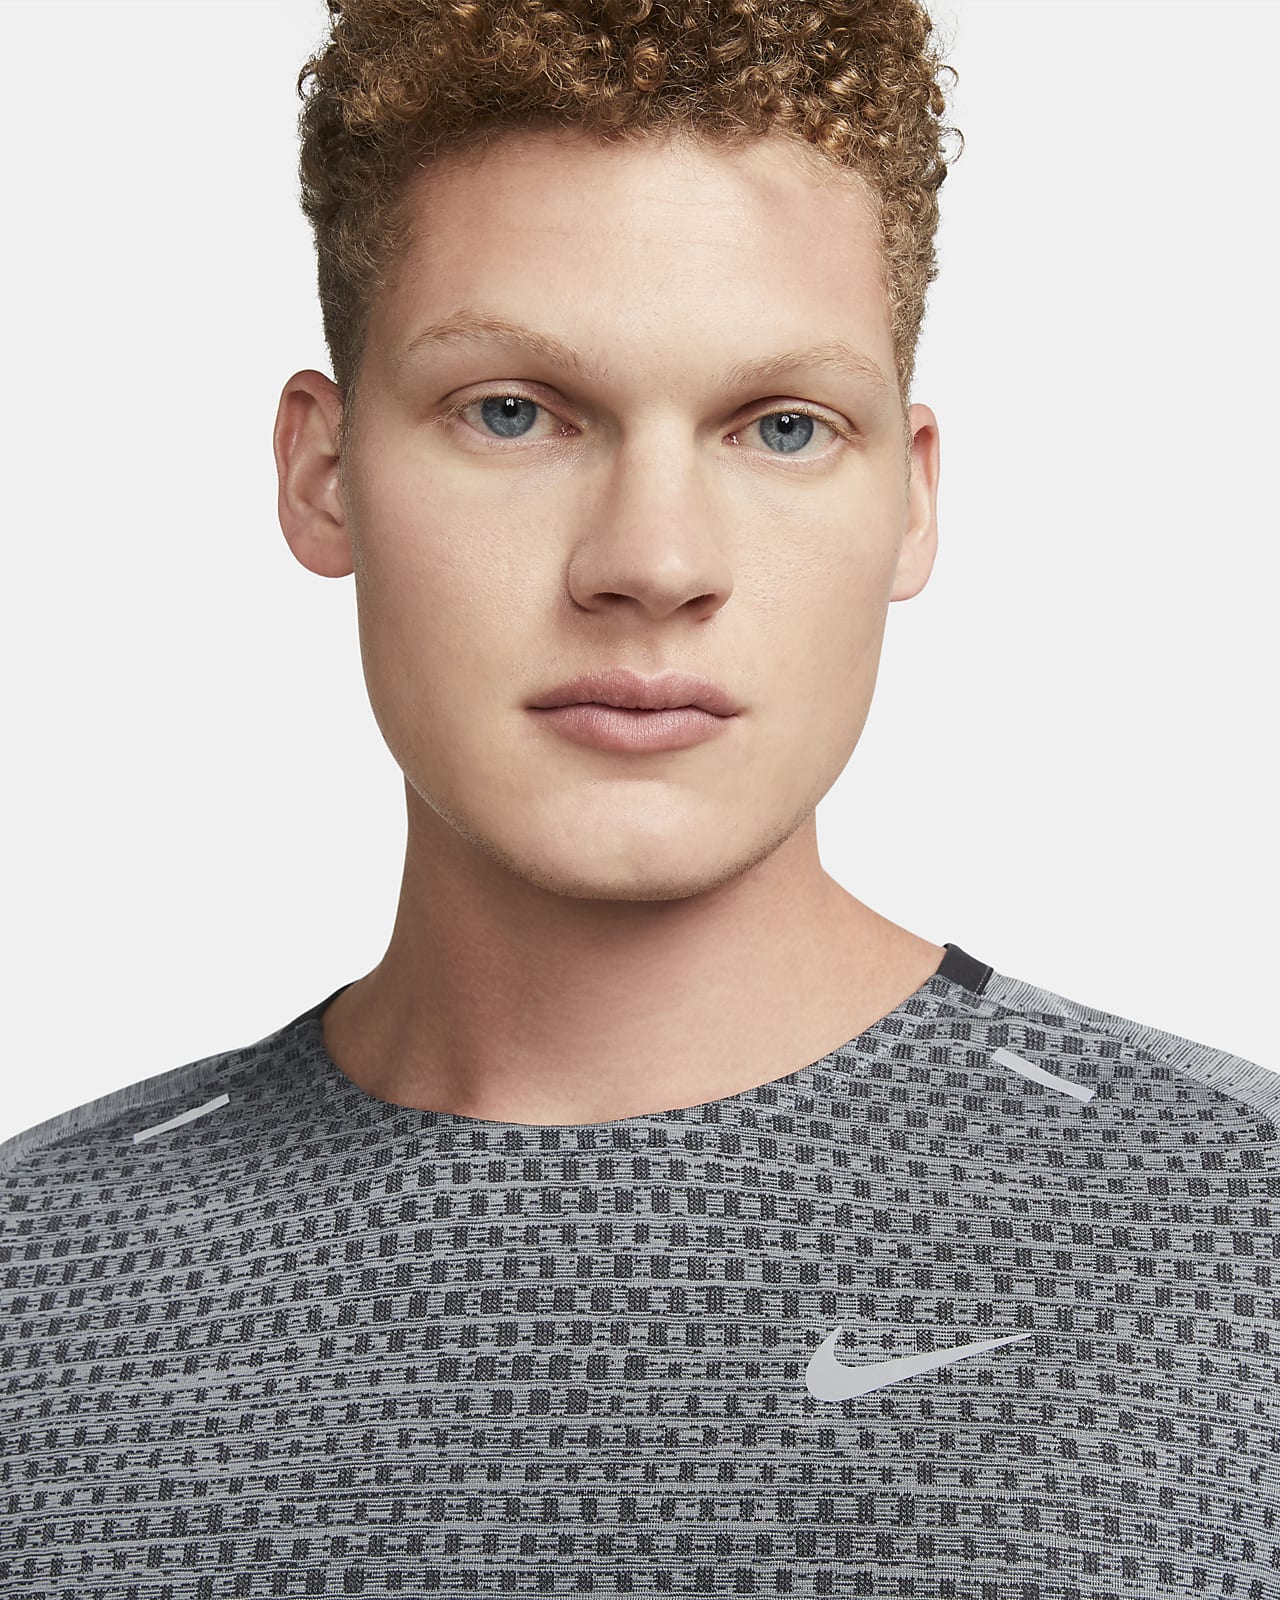 Nike TechKnit Men's Dri-FIT ADV Long-sleeve Running Top. Nike GB